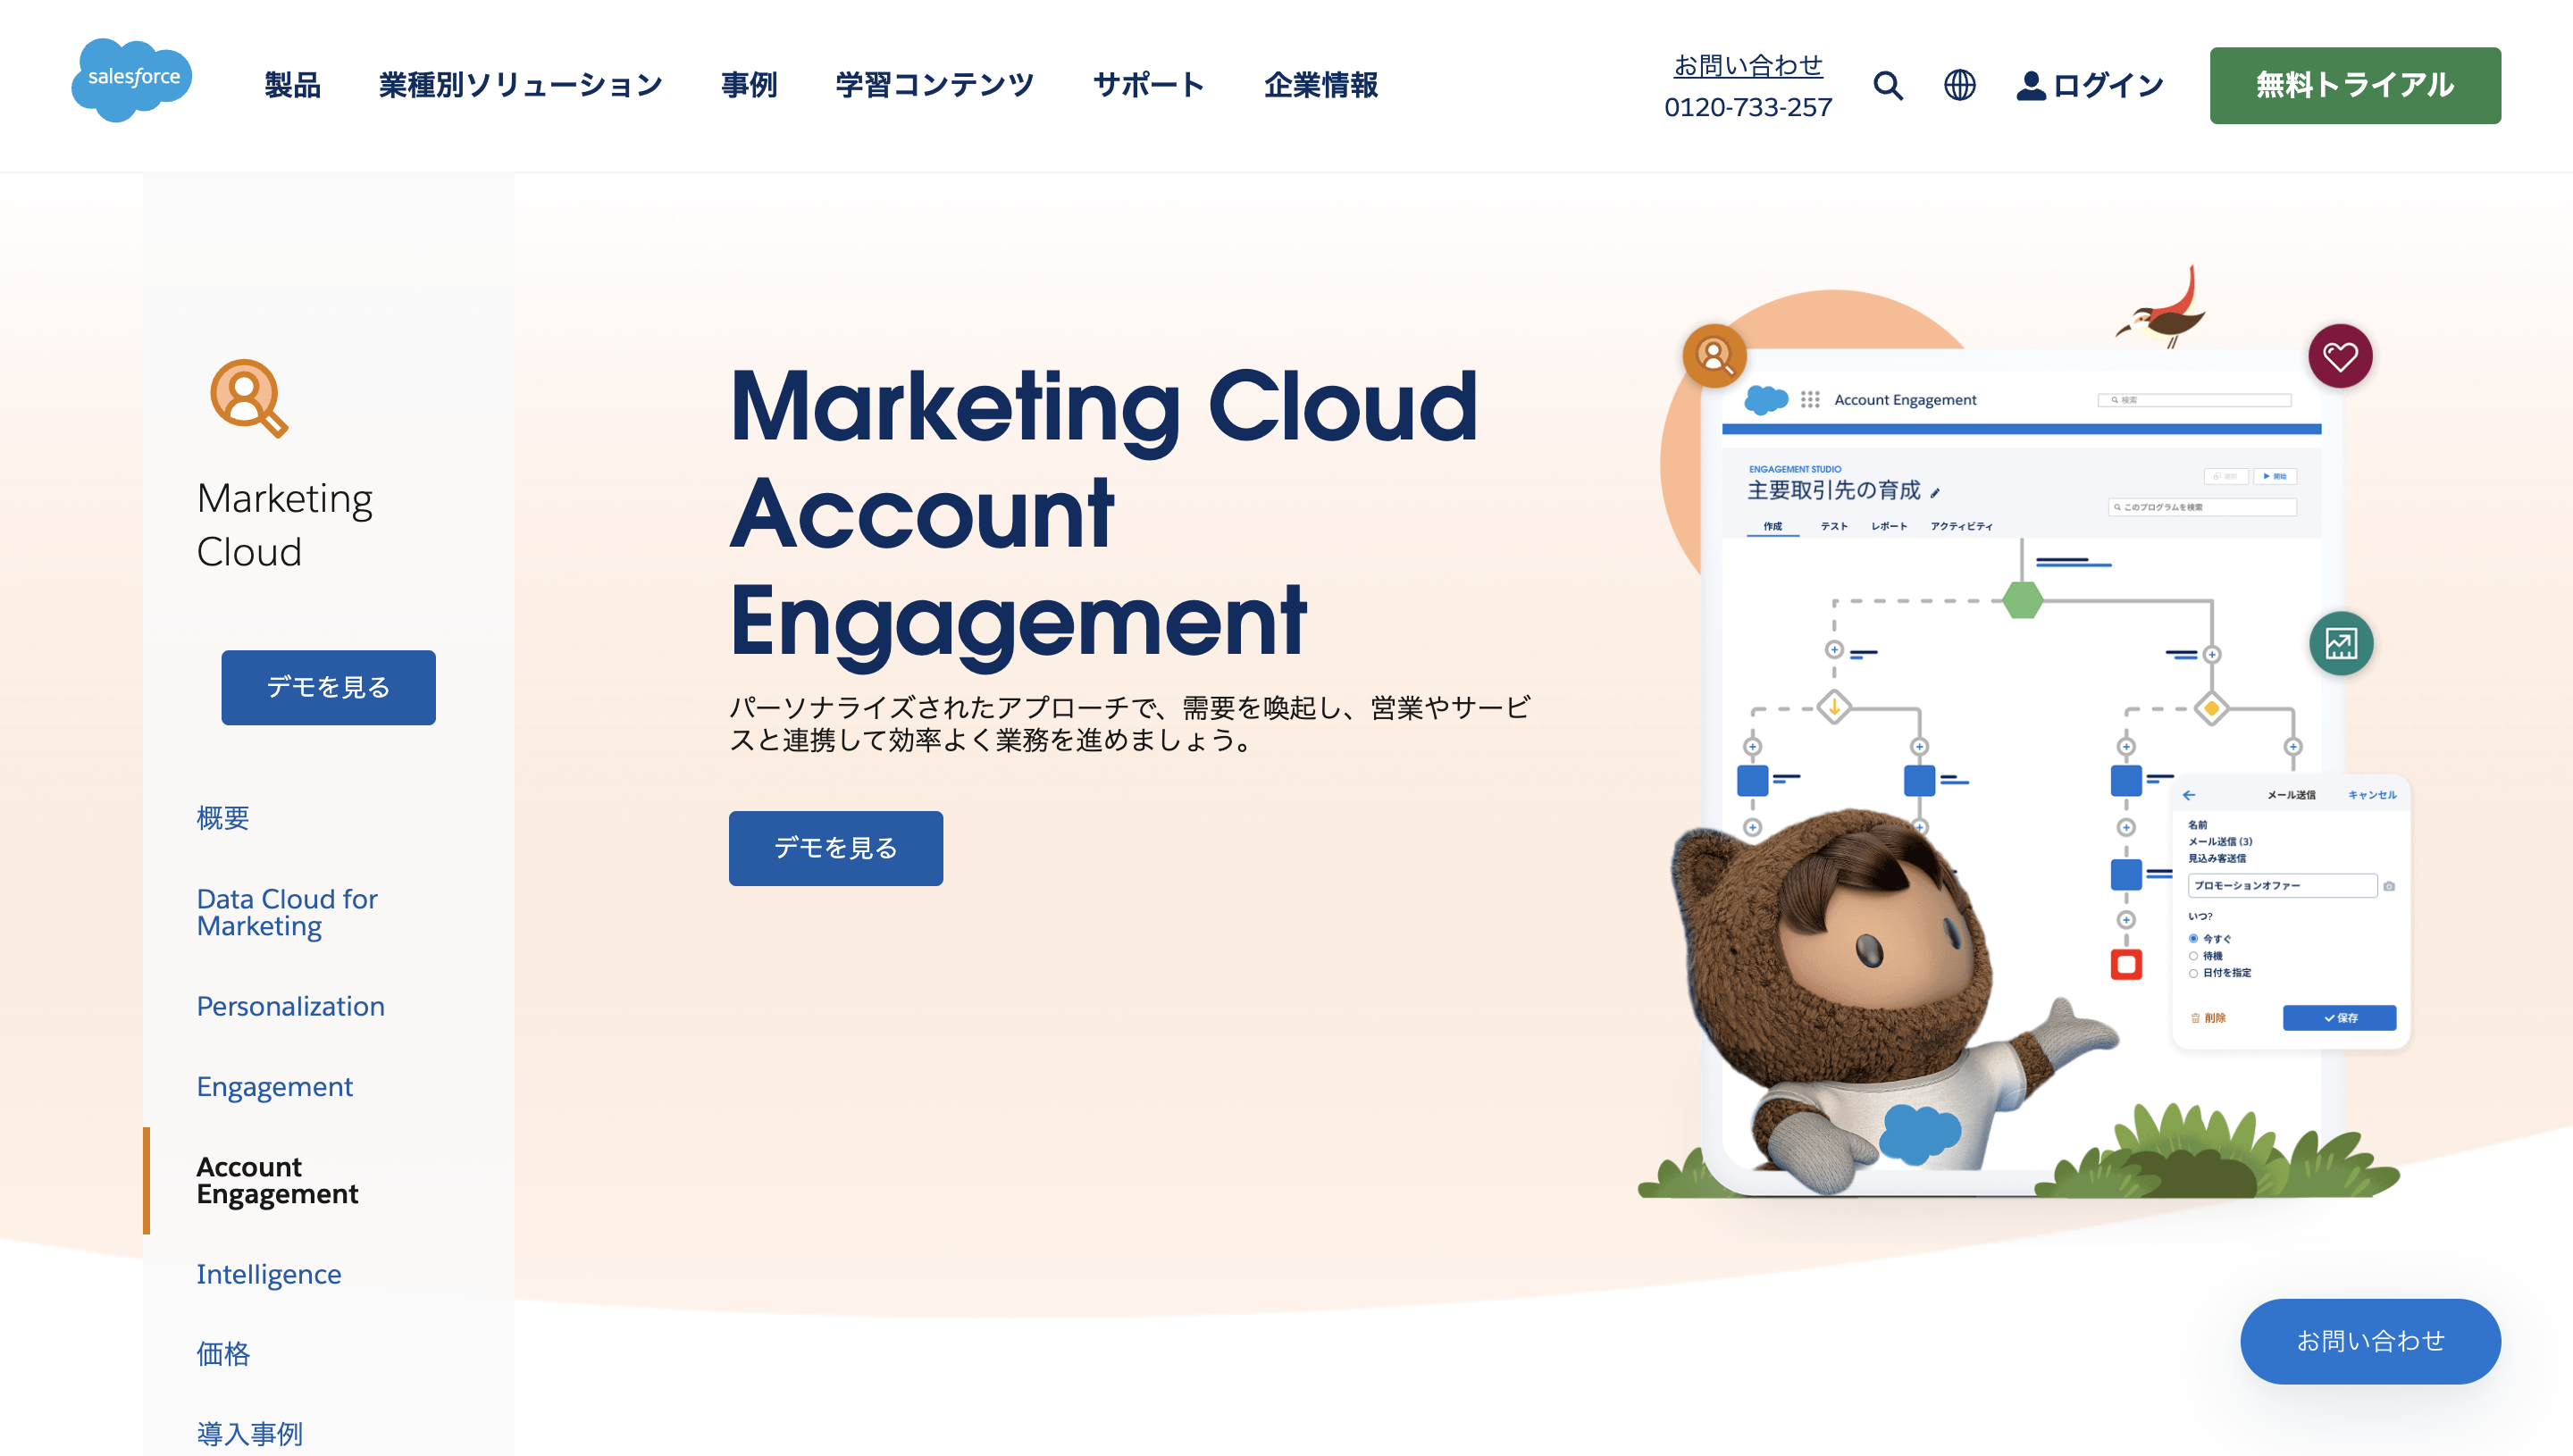 Salesforce「Marketing Cloud Account Engagement」